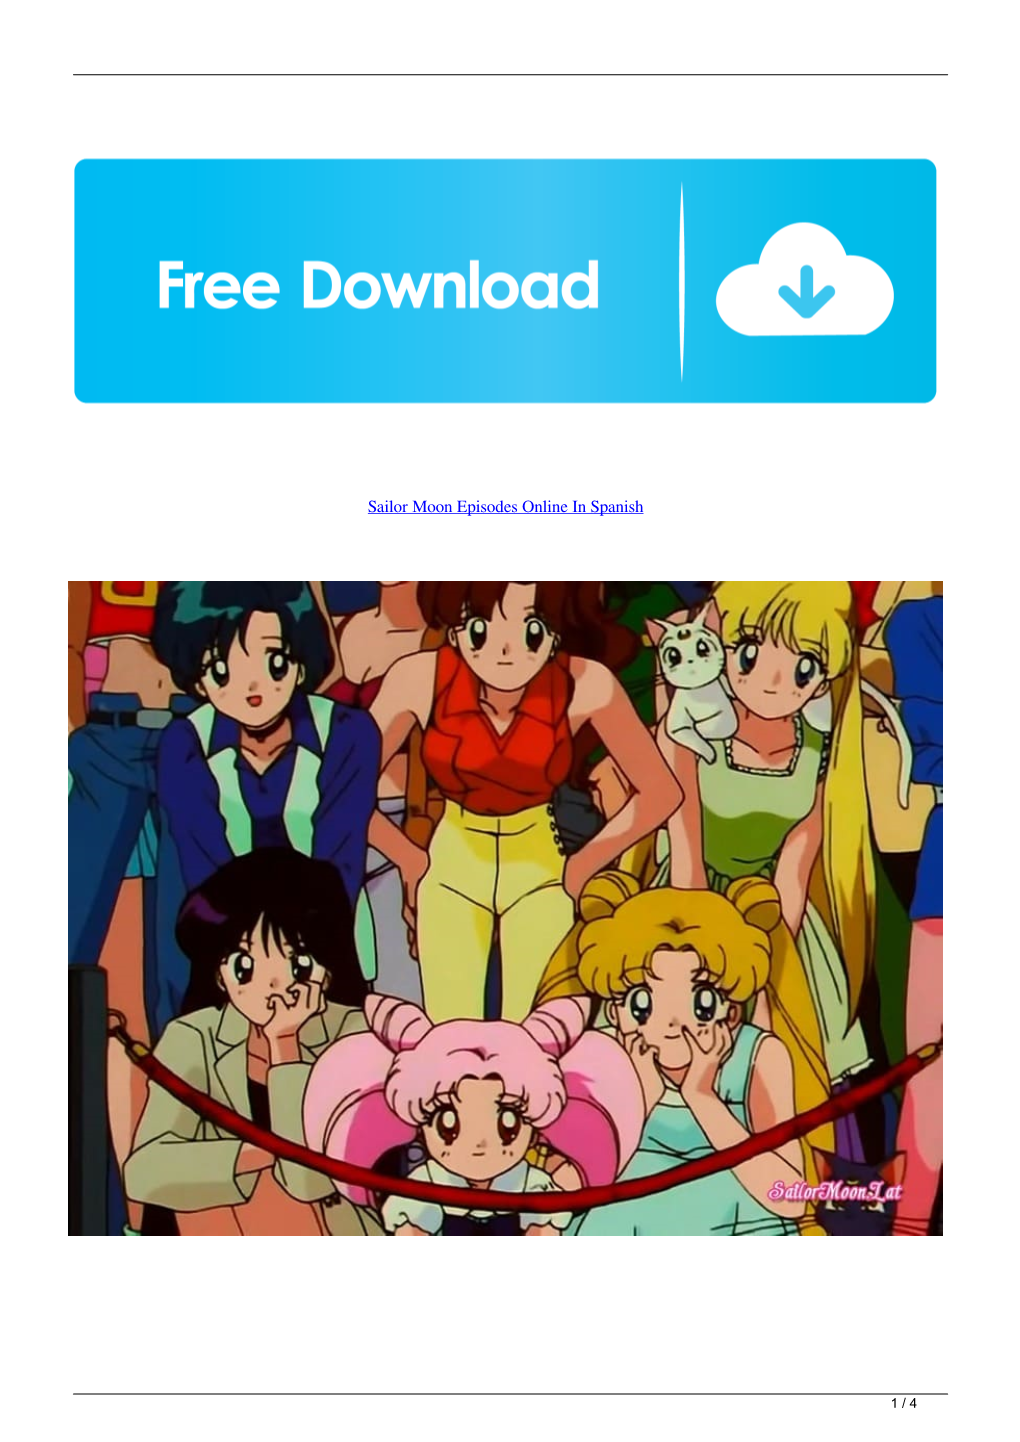 Sailor Moon Episodes Online in Spanish